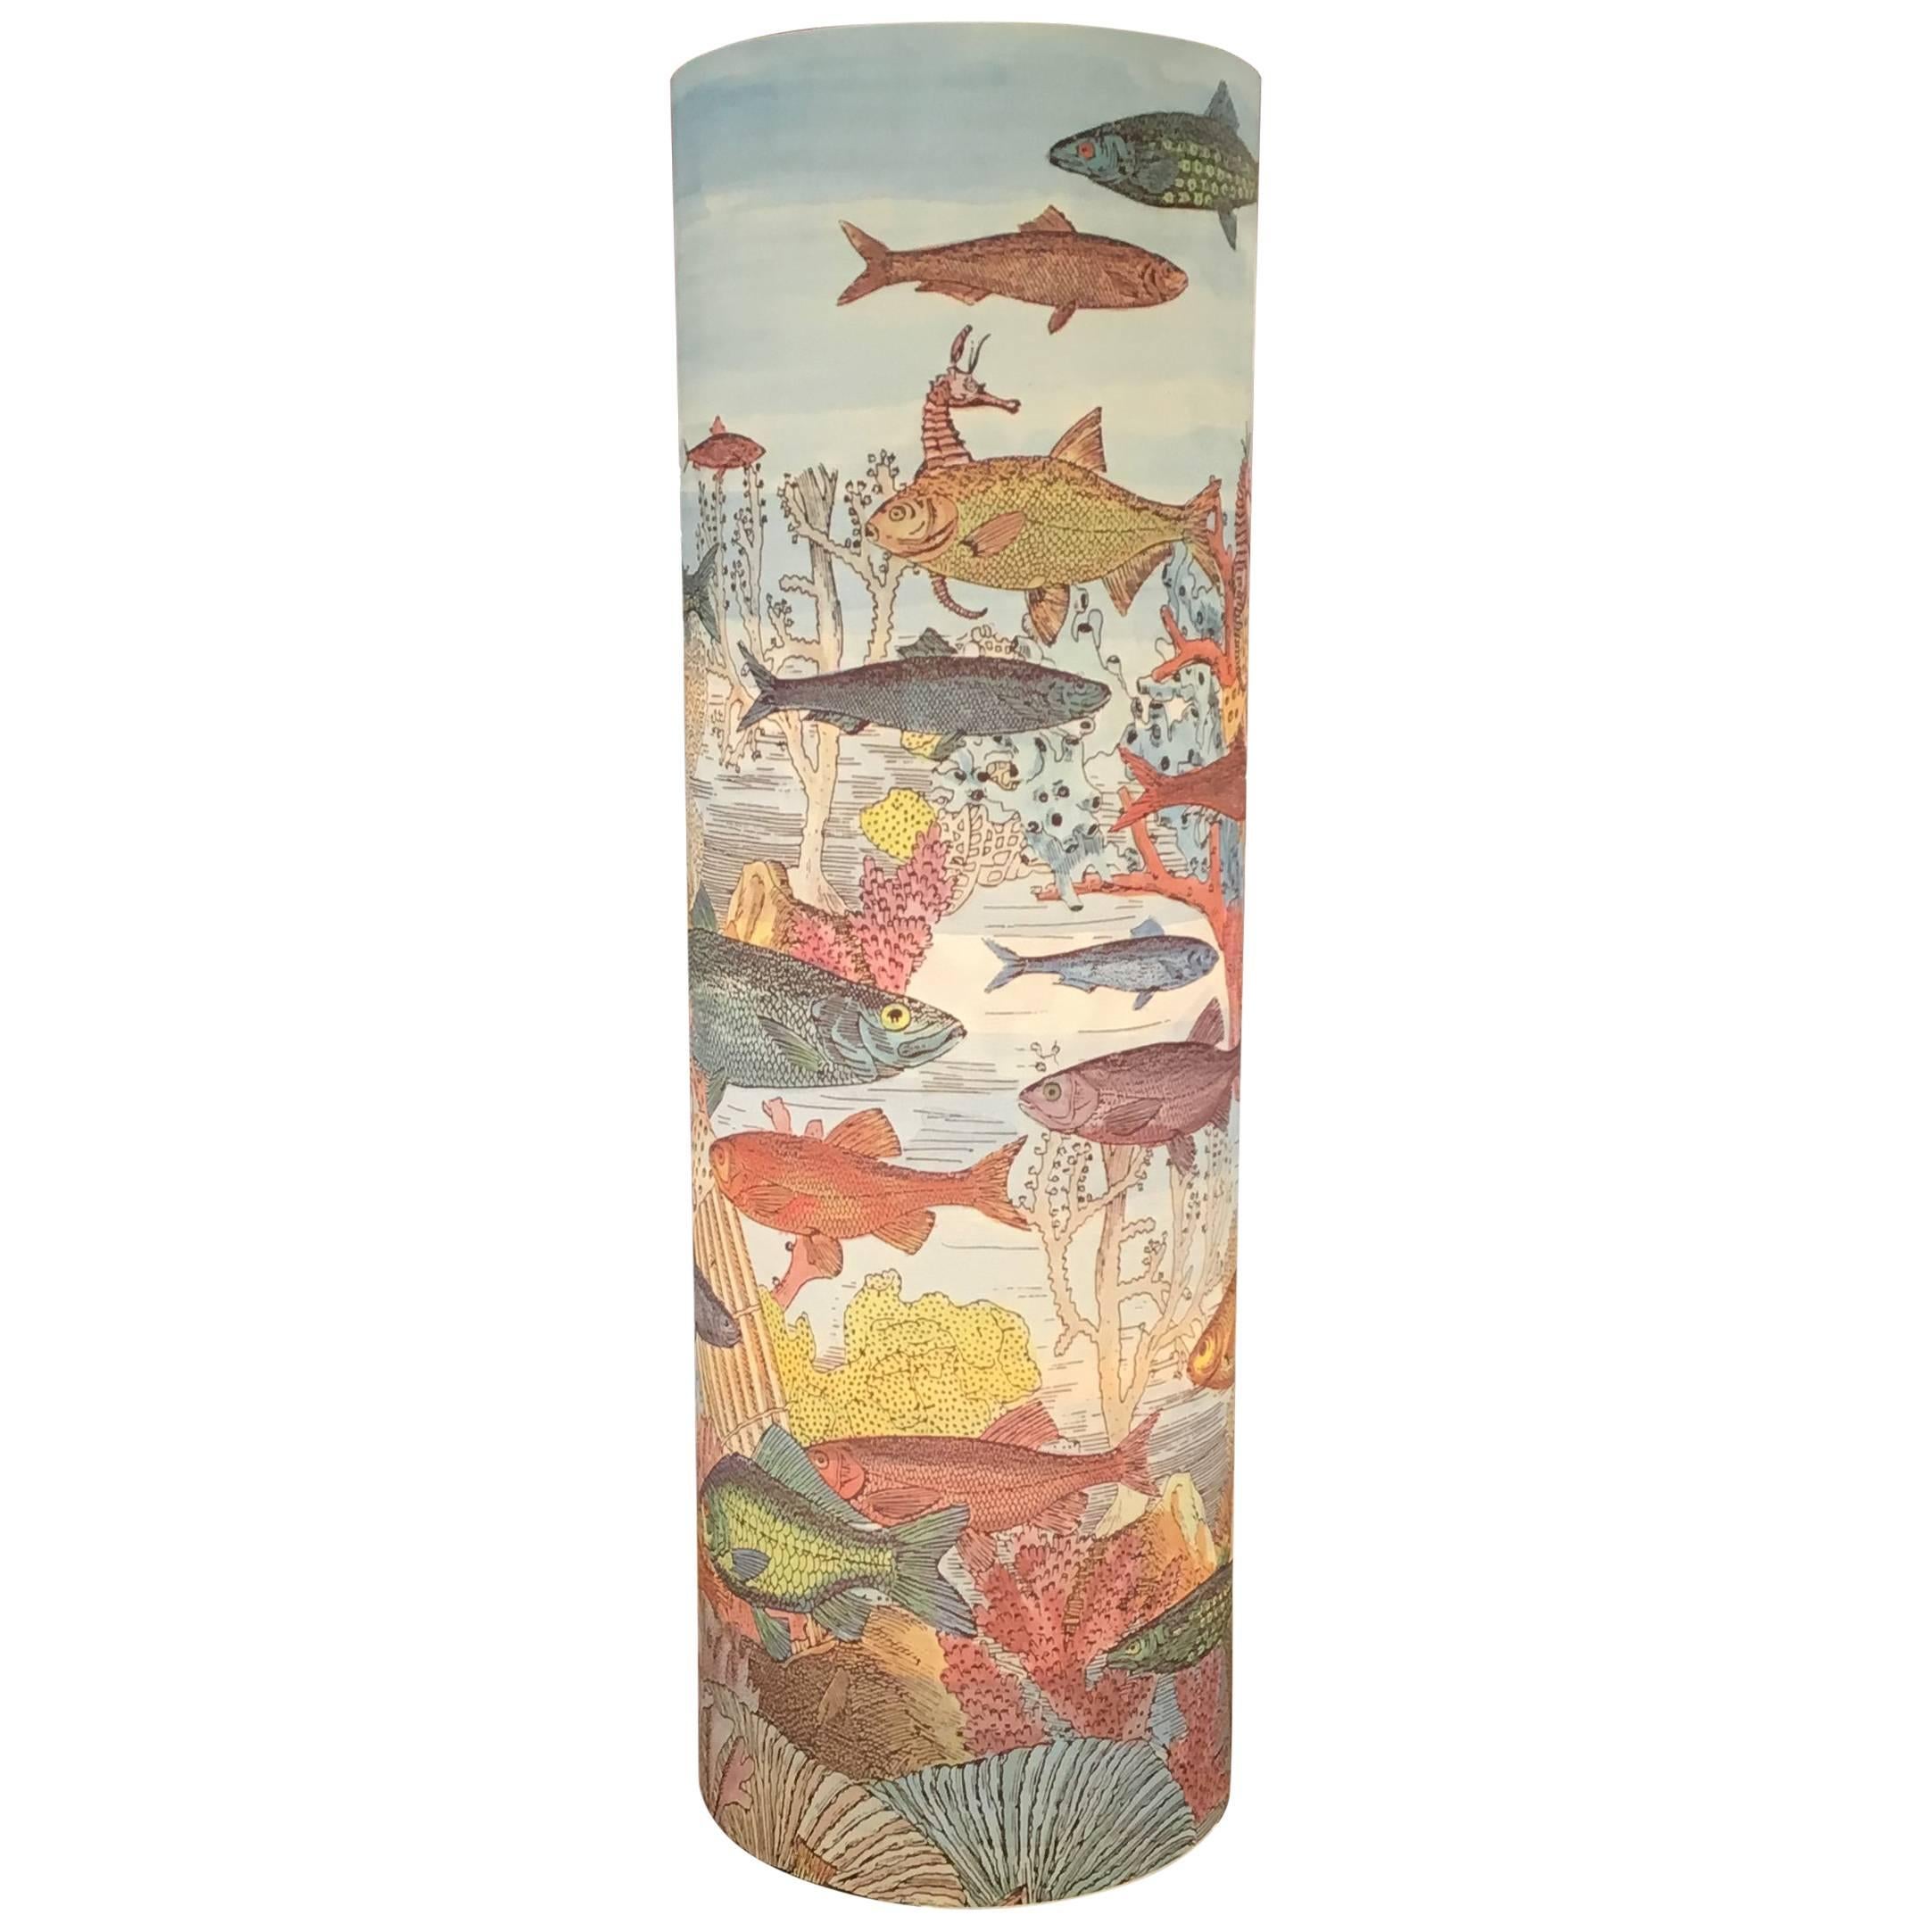 Table Lamp by Barnaba Fornasetti for Antonangeli, "Aquarium" made in Italy, 1990